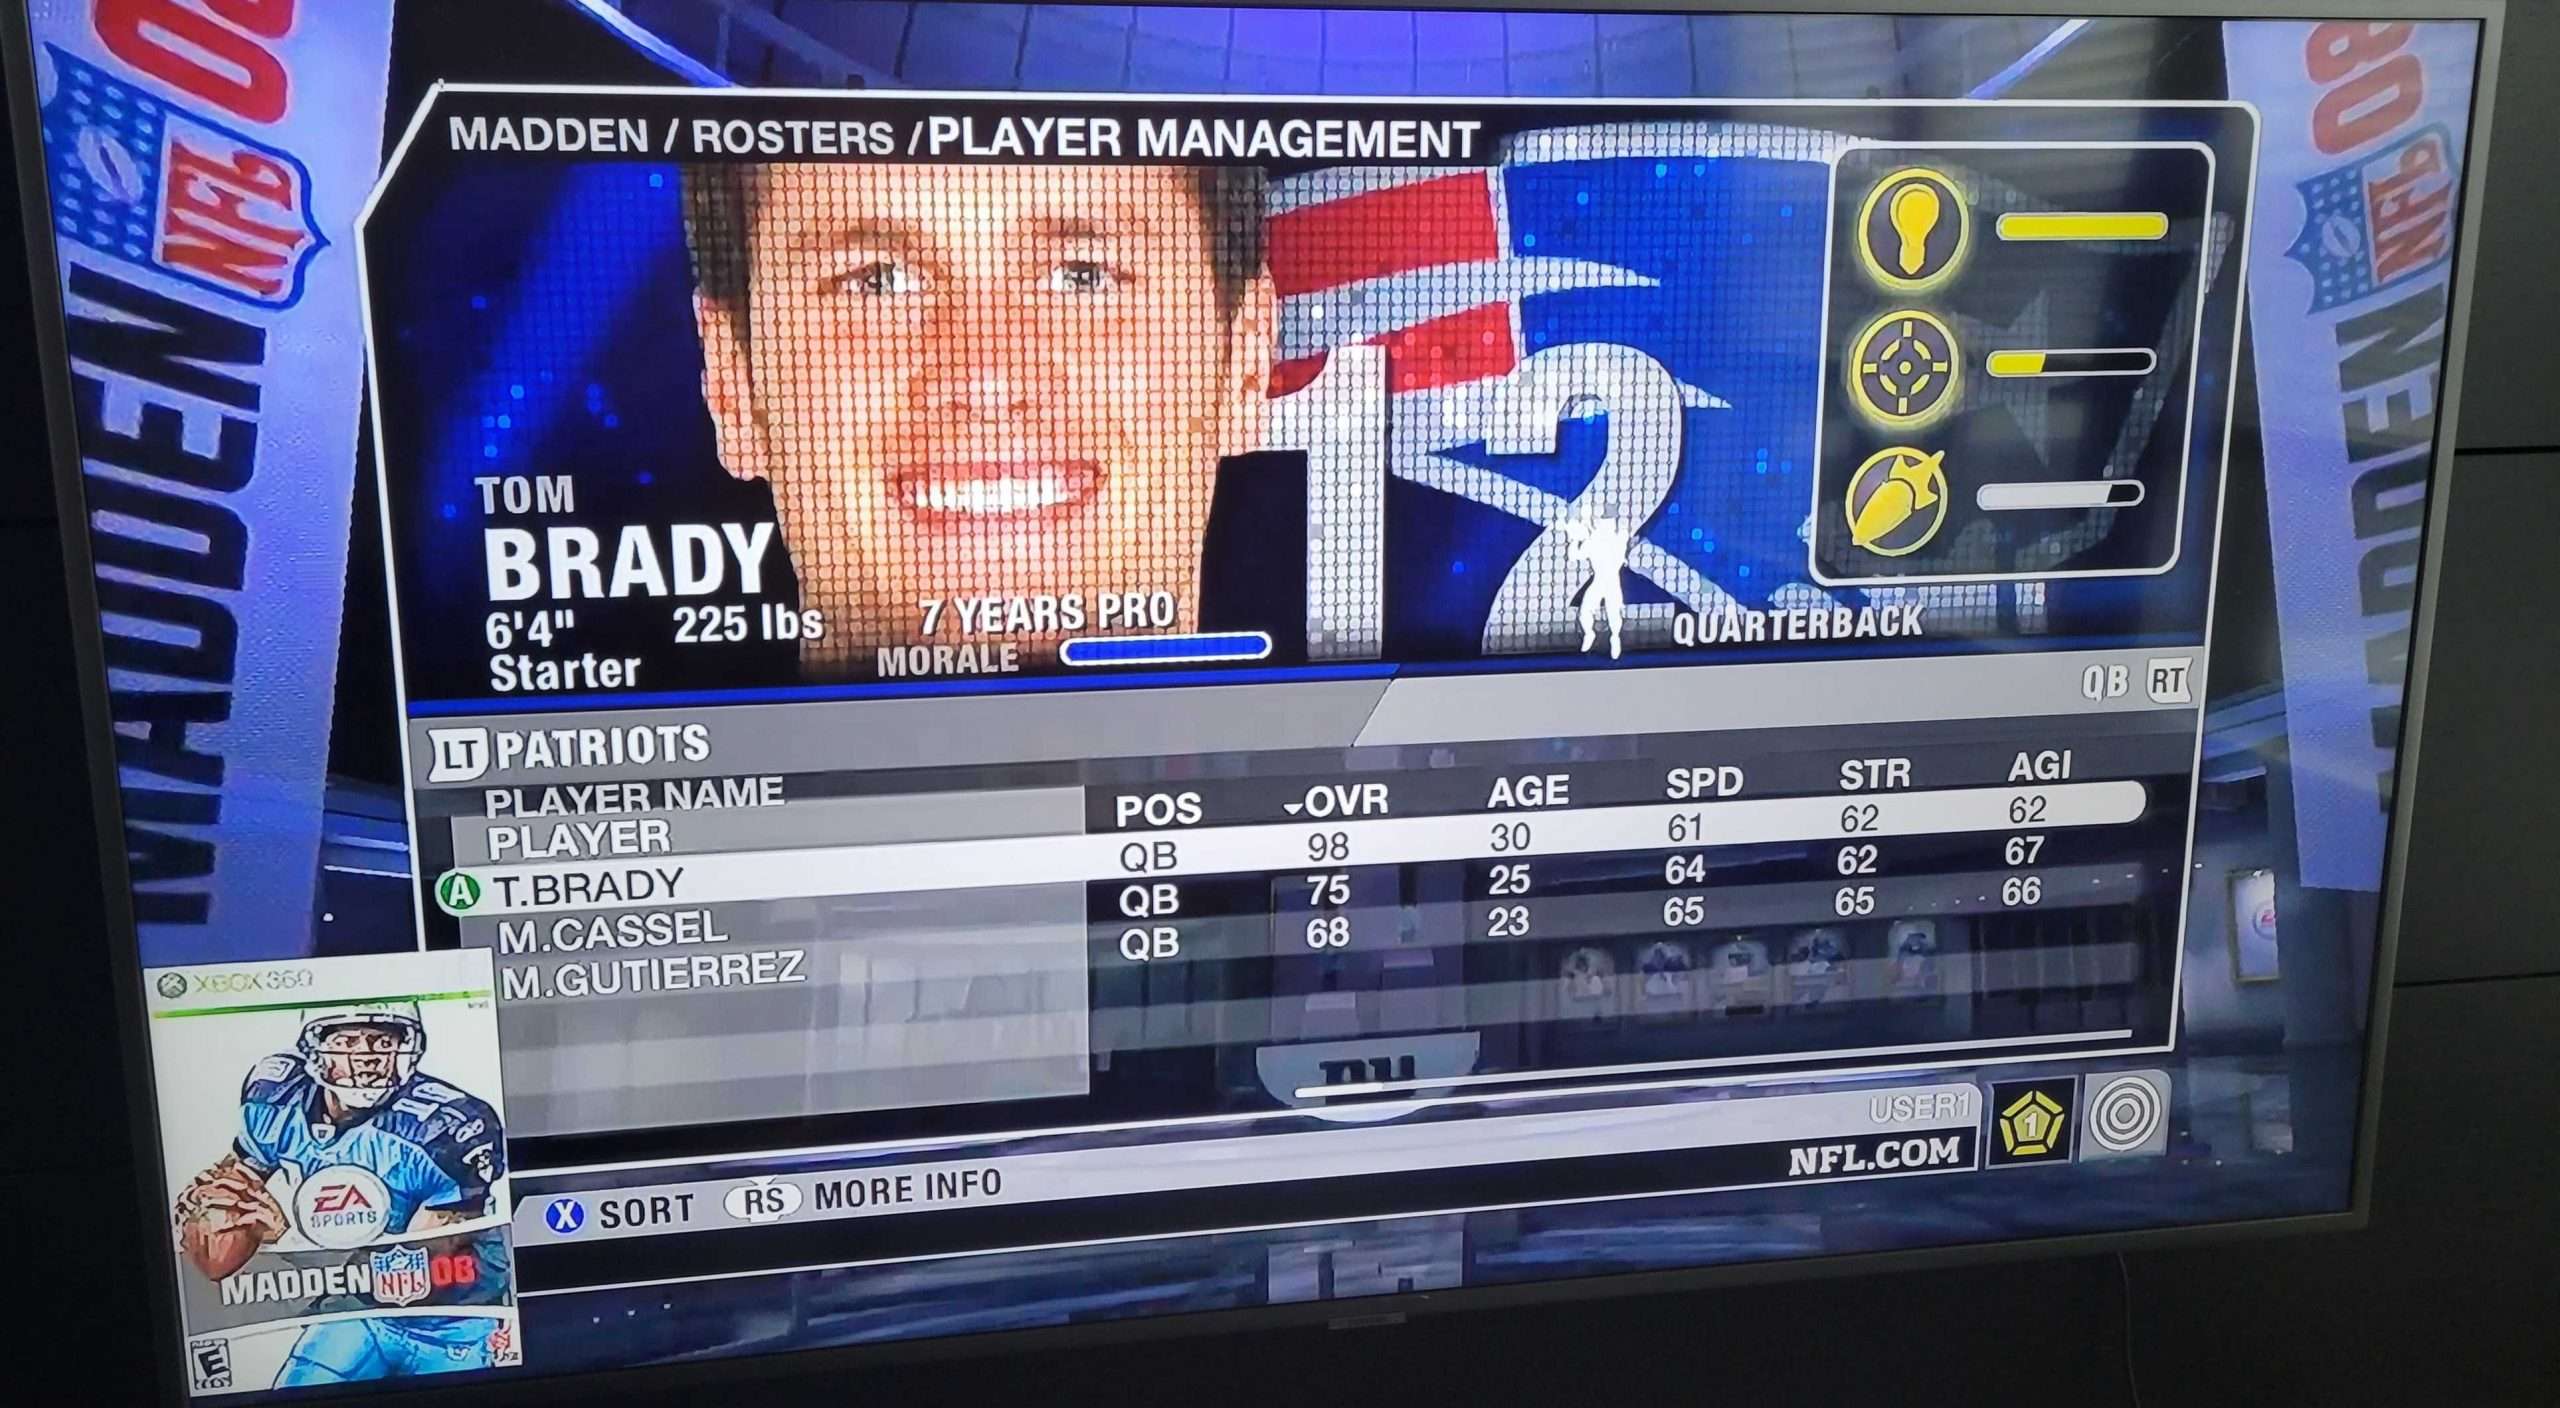 2008 Tom Brady Madden Rating Card